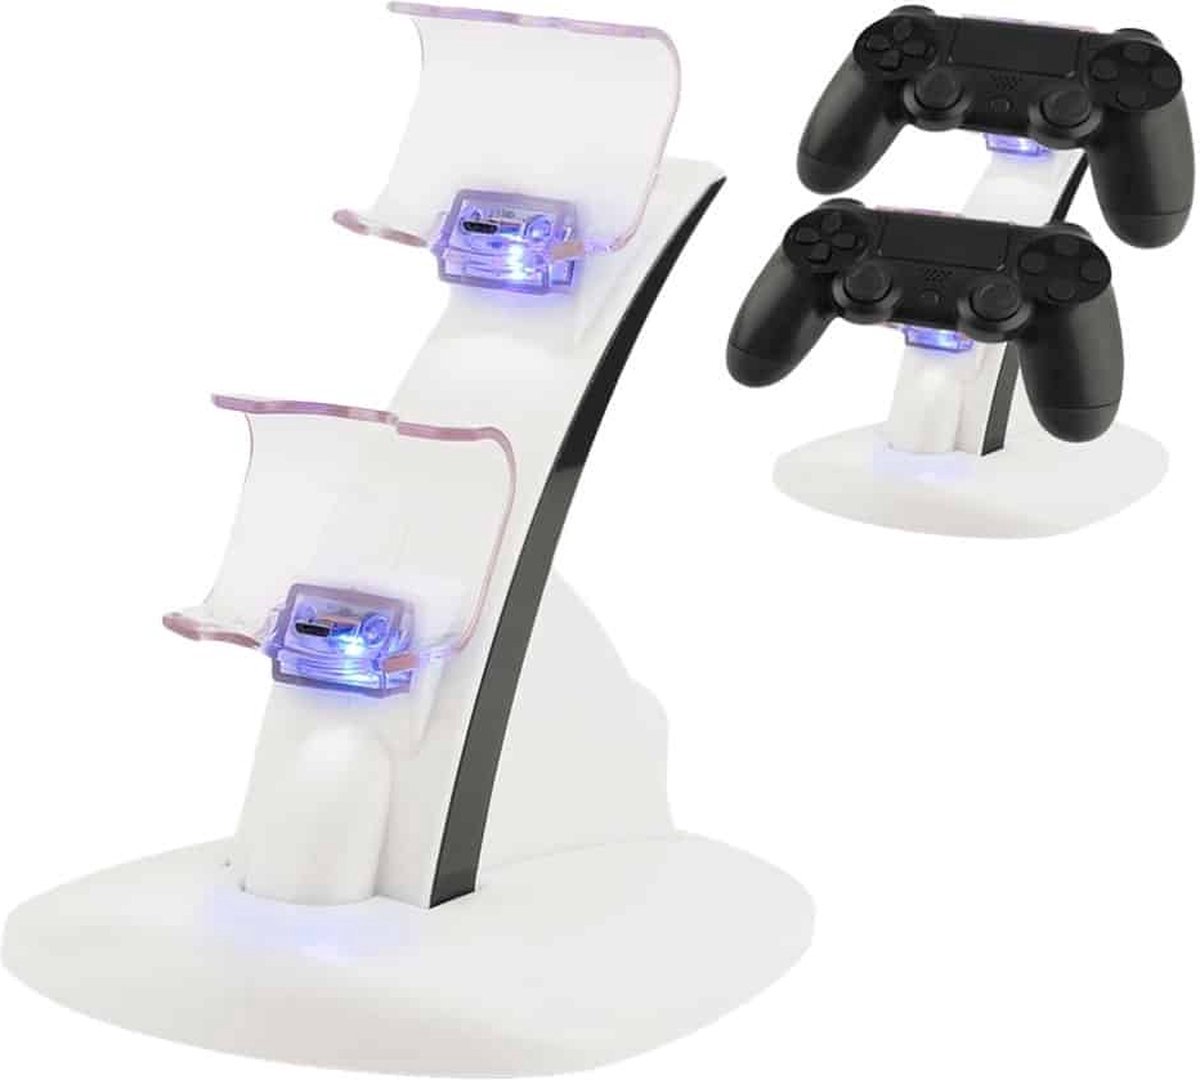 iPlay - Oplaadstation voor PS4 - Voor 2 controllers - Playstation 4 Slim Pro - Met LED - Charging stand